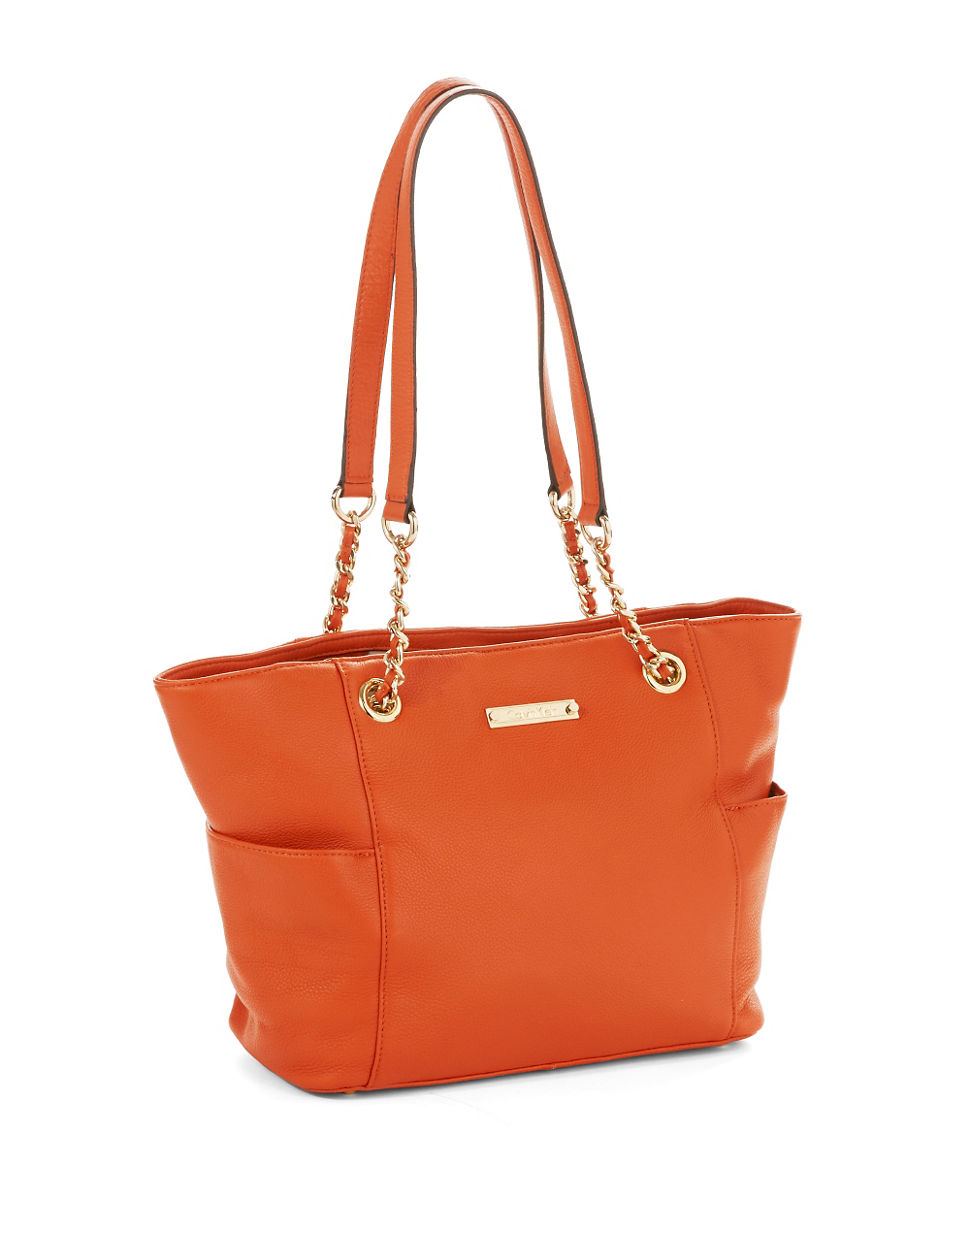 Calvin Klein Key Item Leather Tote Bag in Orange - Lyst